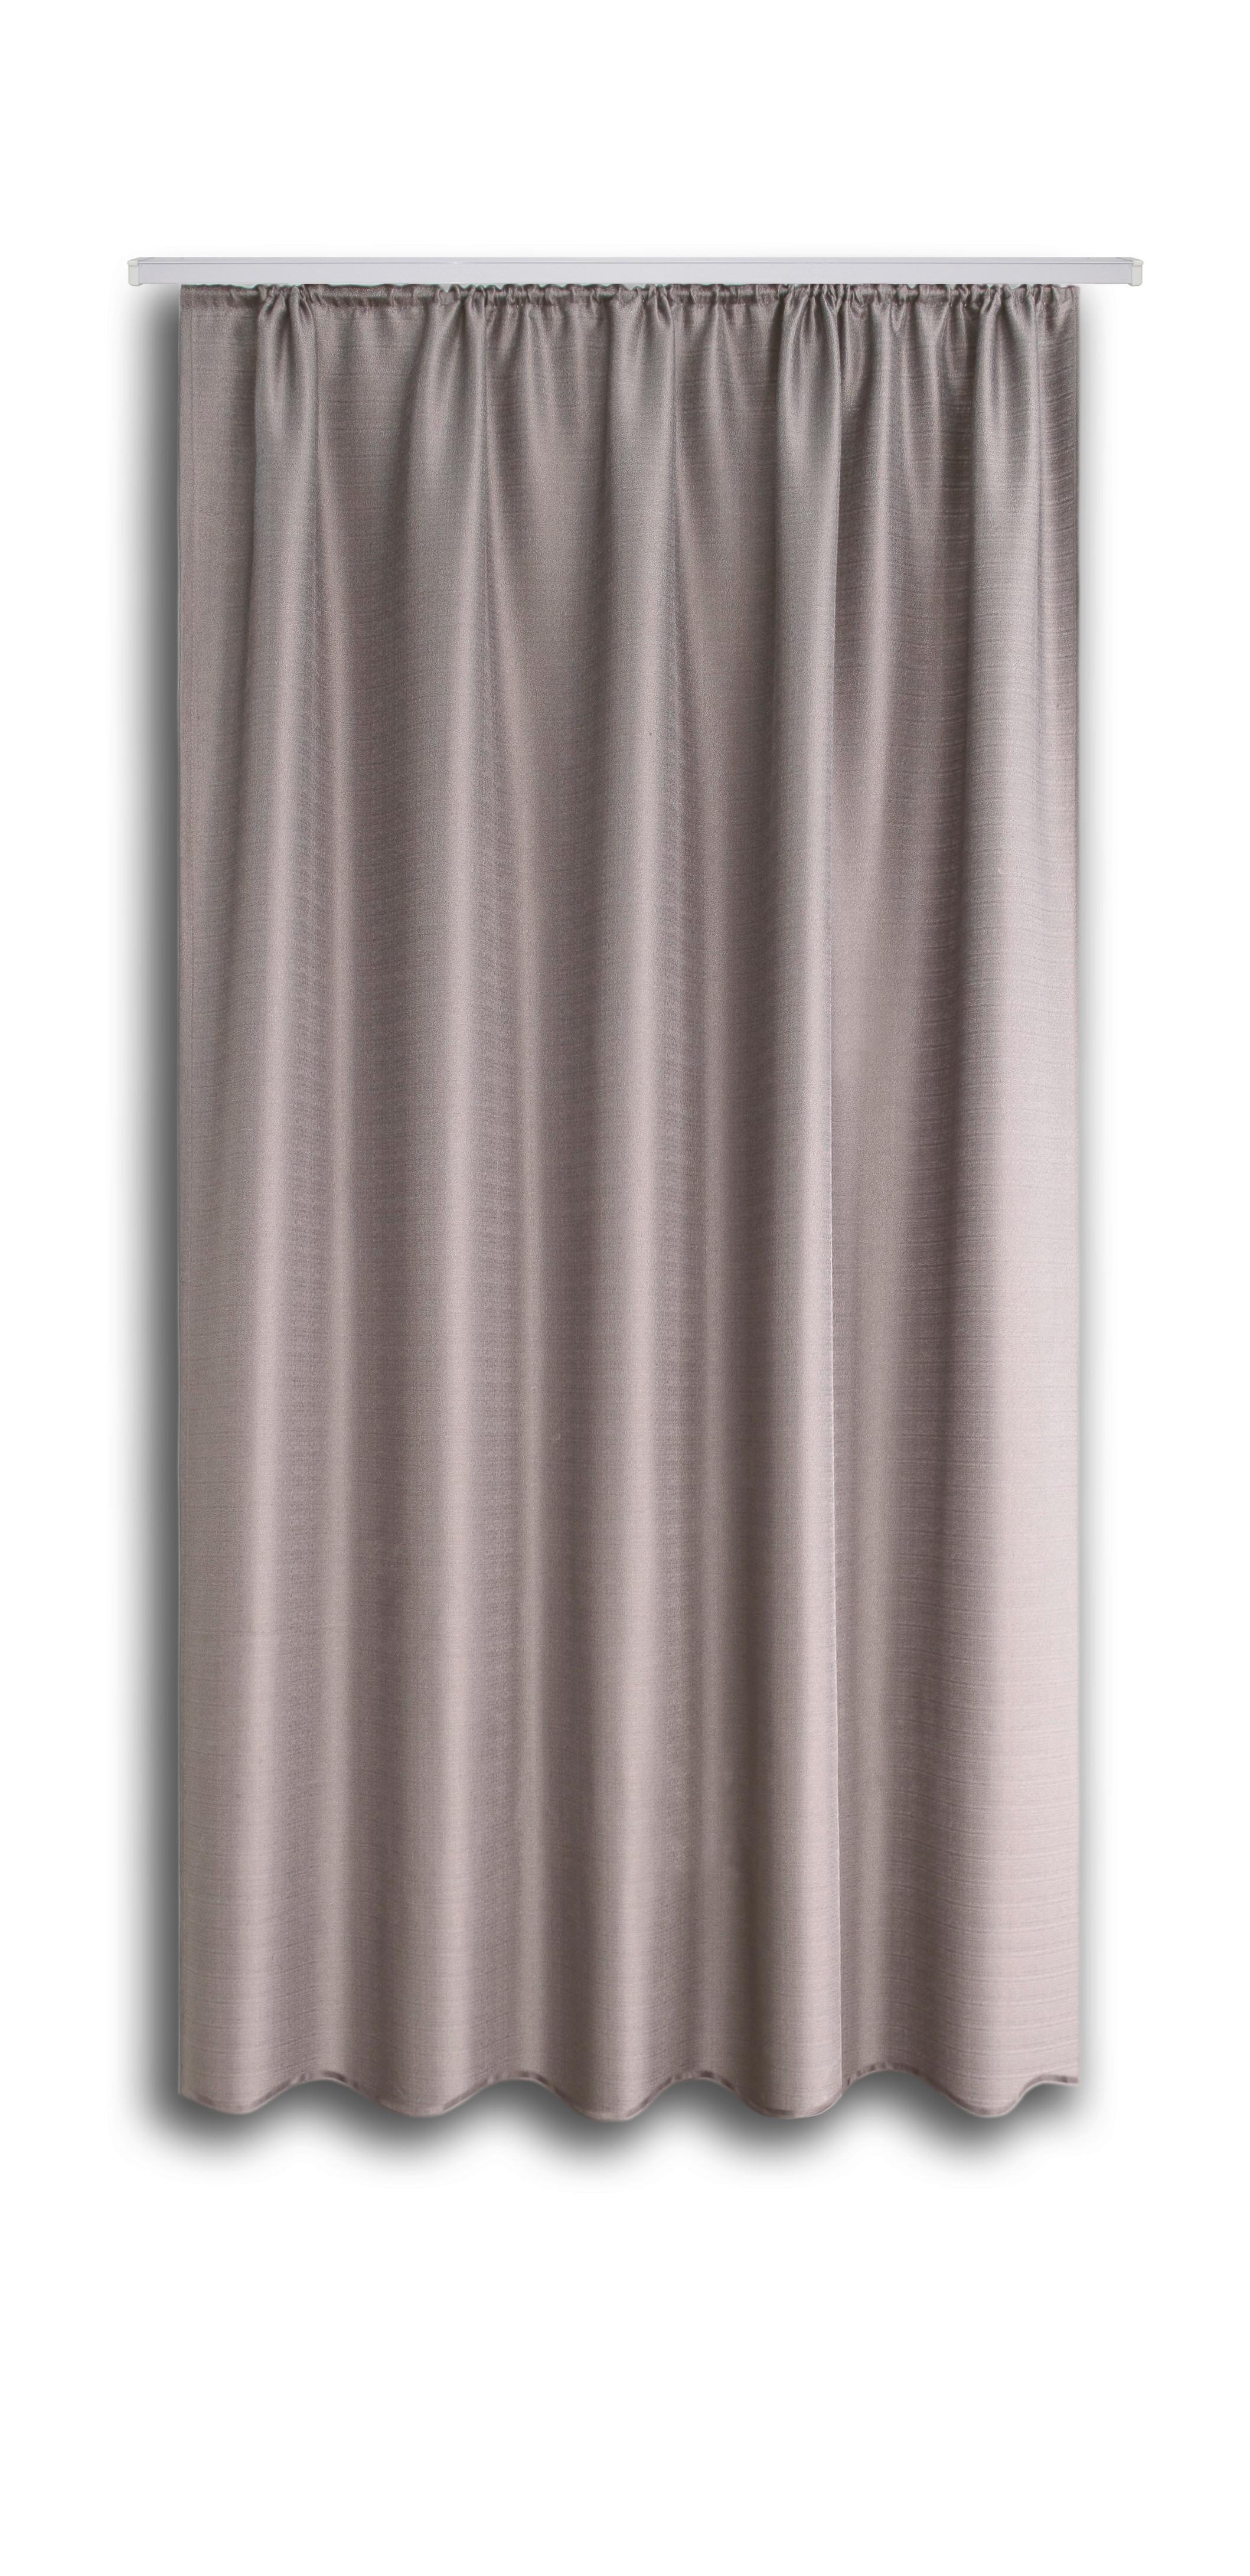 Vorhang mit Band 135x175 cm Taupe - Taupe, KONVENTIONELL, Textil (135/175cm) - Ondega